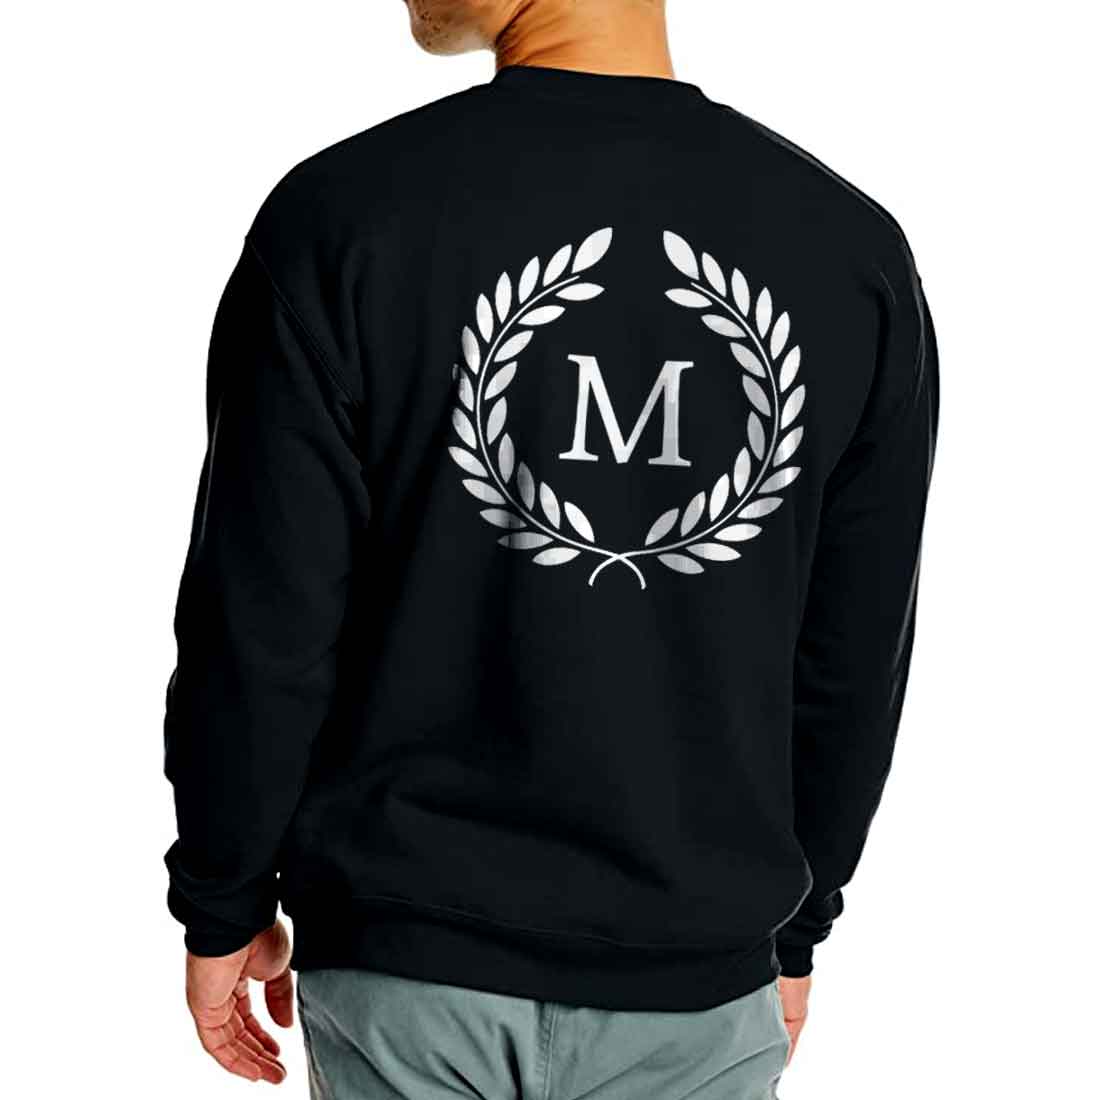 Personalized Black Sweatshirt for Men Full Sleeves - Monogram